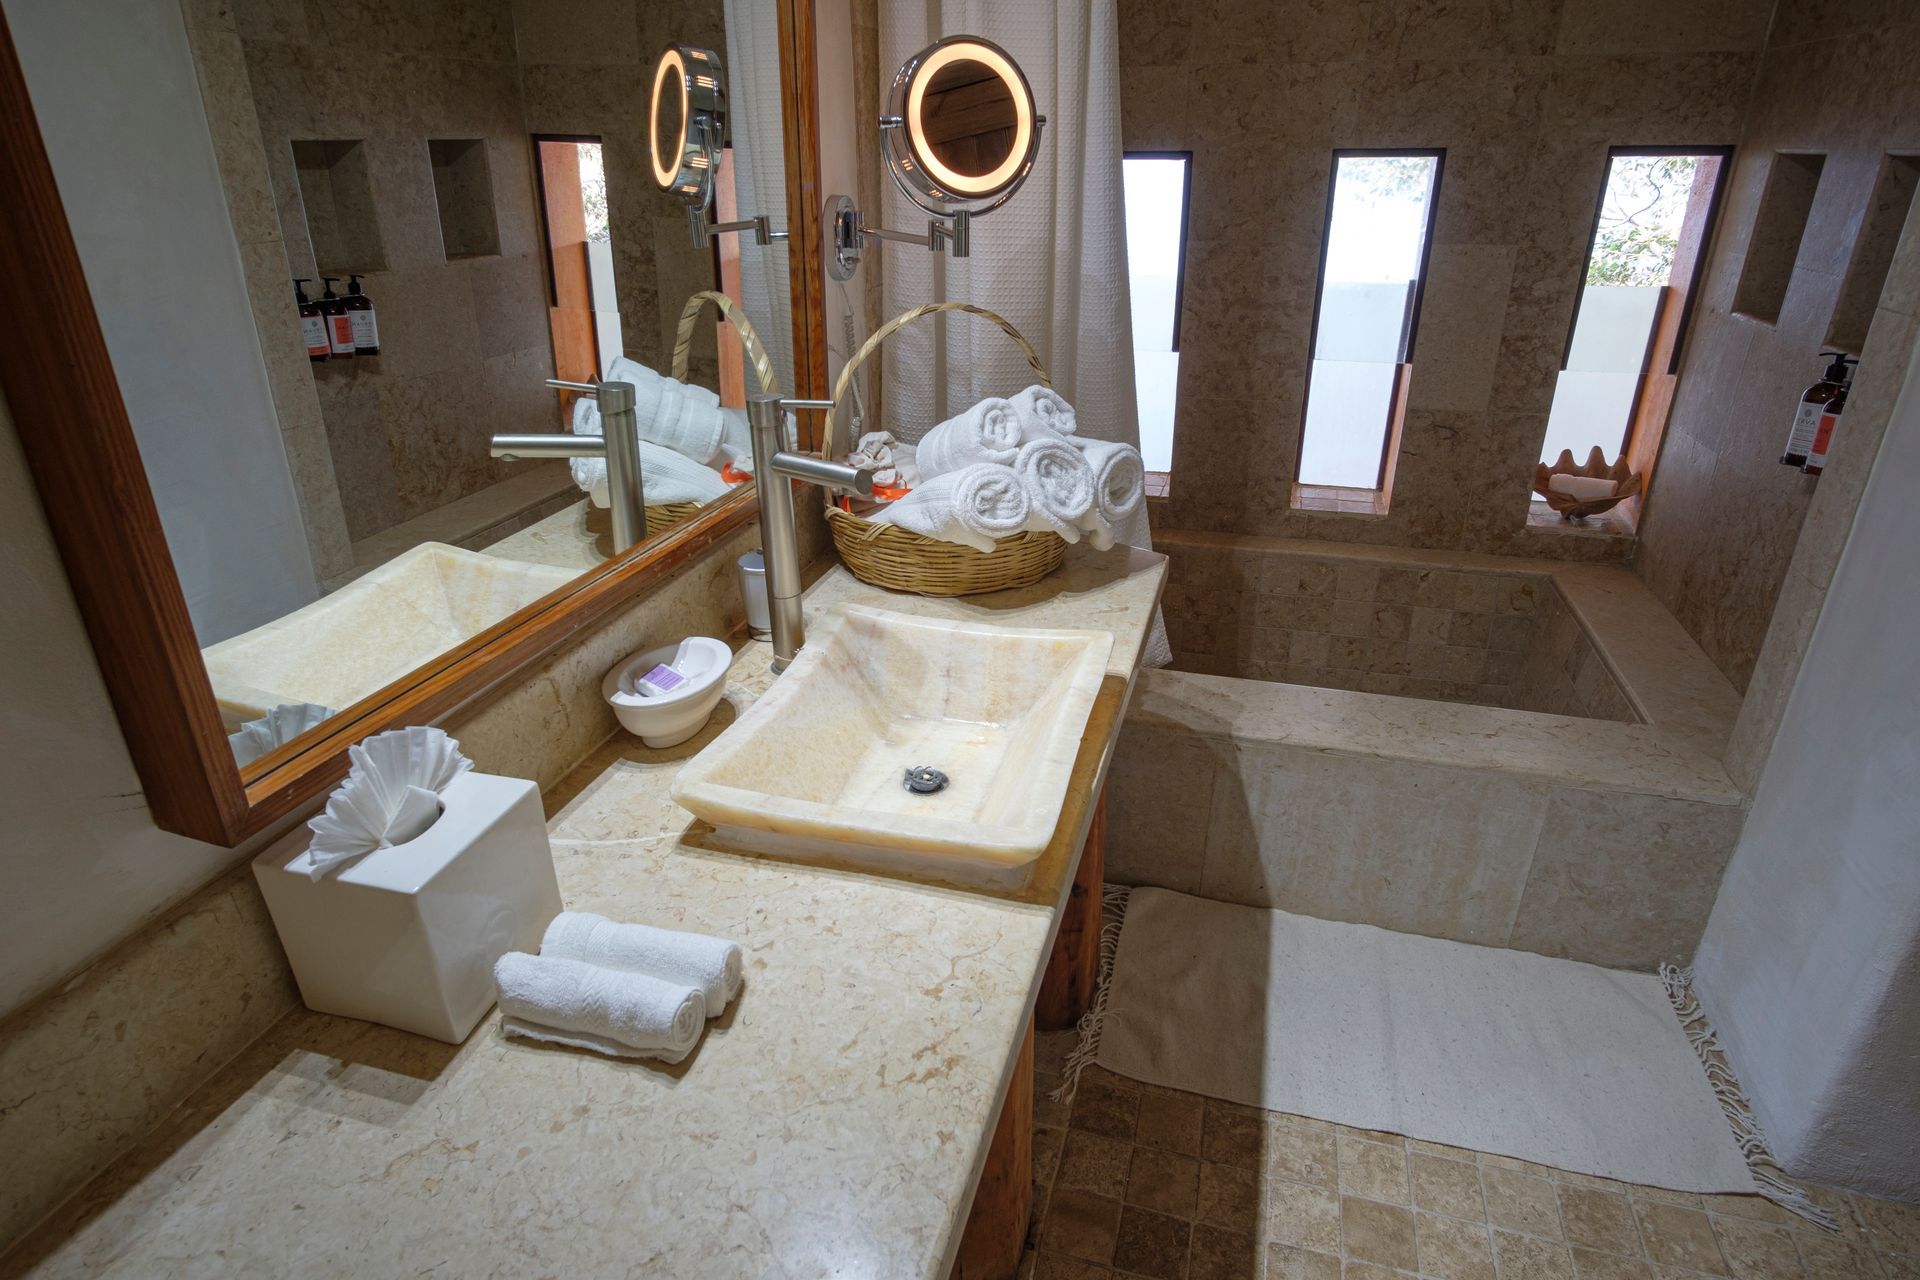 a bathroom with a sink, mirror and tub